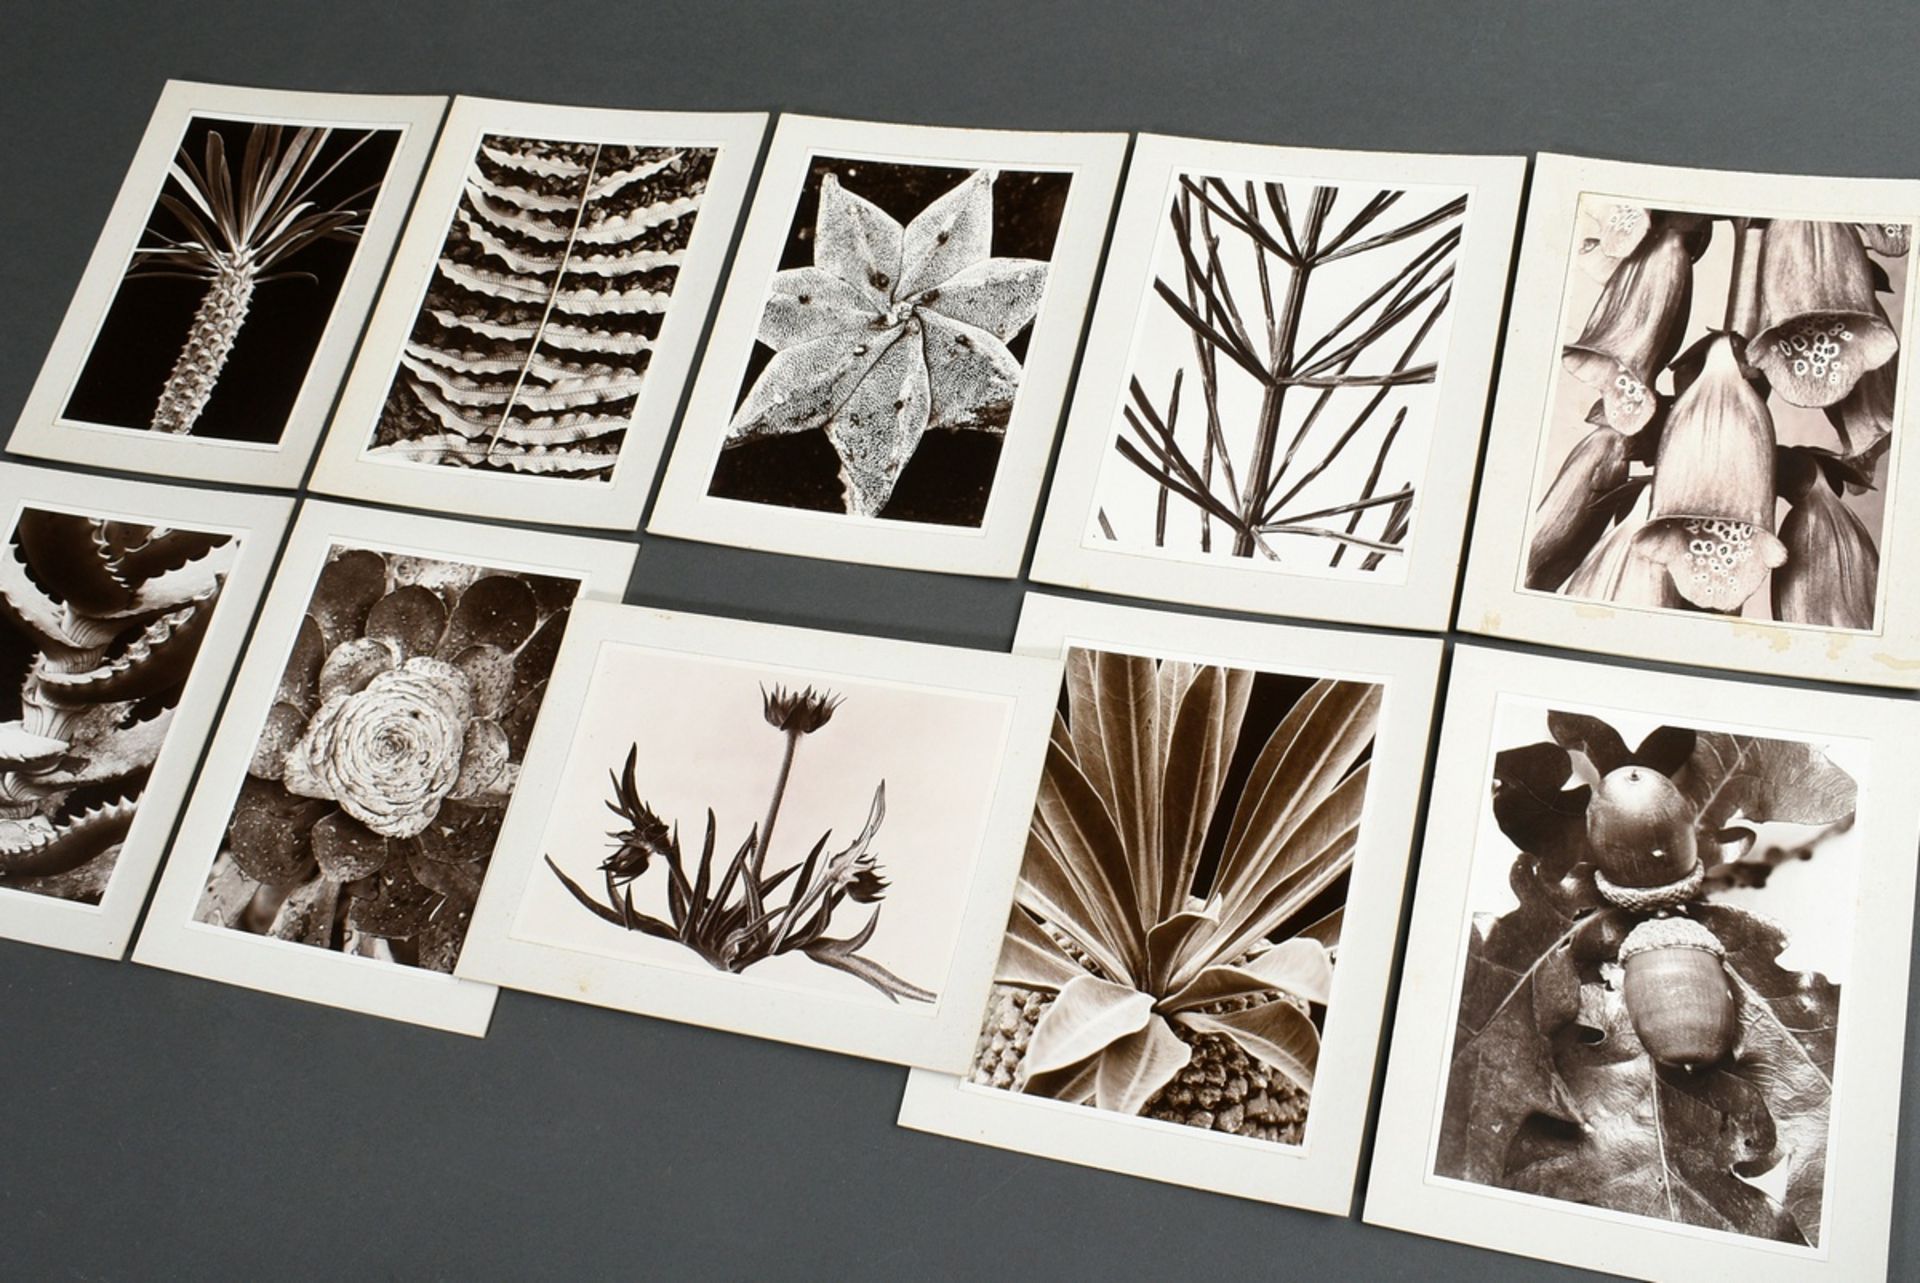 10 Renger-Patzsch, Albert (1897-1966) "Plant Studies", photographs mounted on cardboard, stamped on